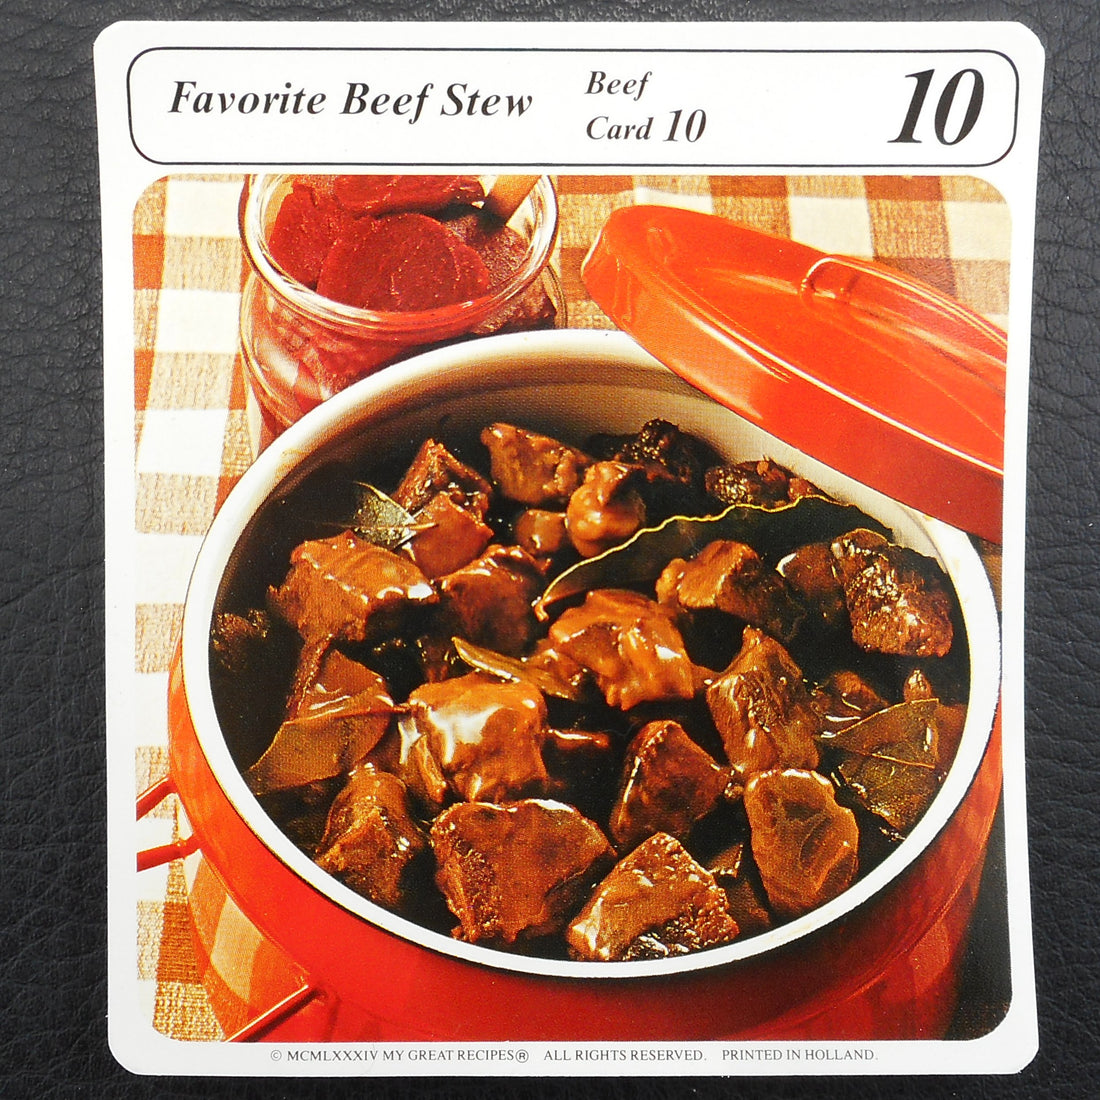 1984 My Great Recipes Card - Featuring Arabia Finel Seppo Mallat Pot